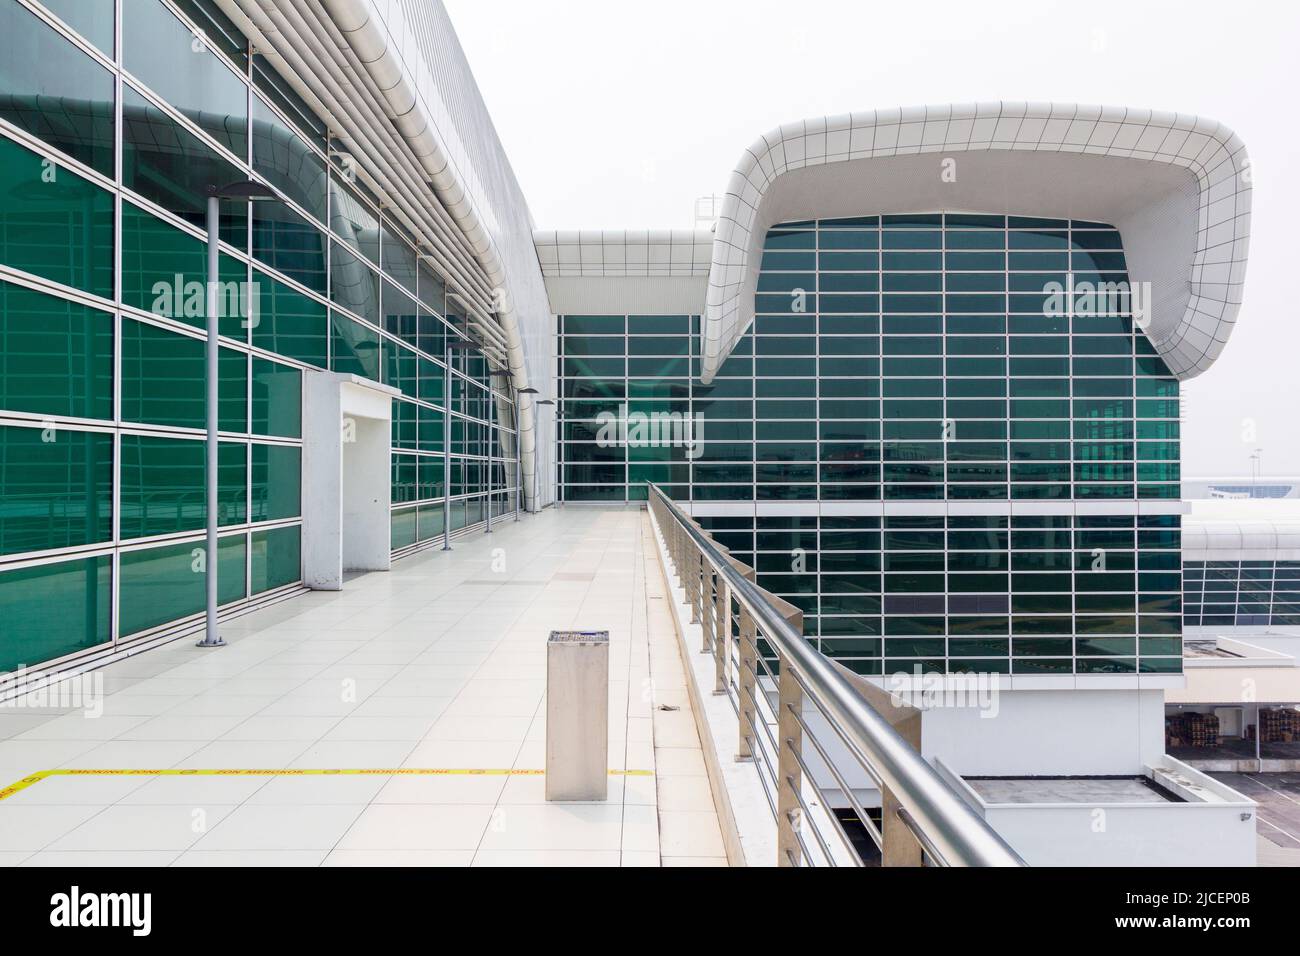 Exterior of the KLIA2 airport terminal in Selangor Malaysia Stock Photo